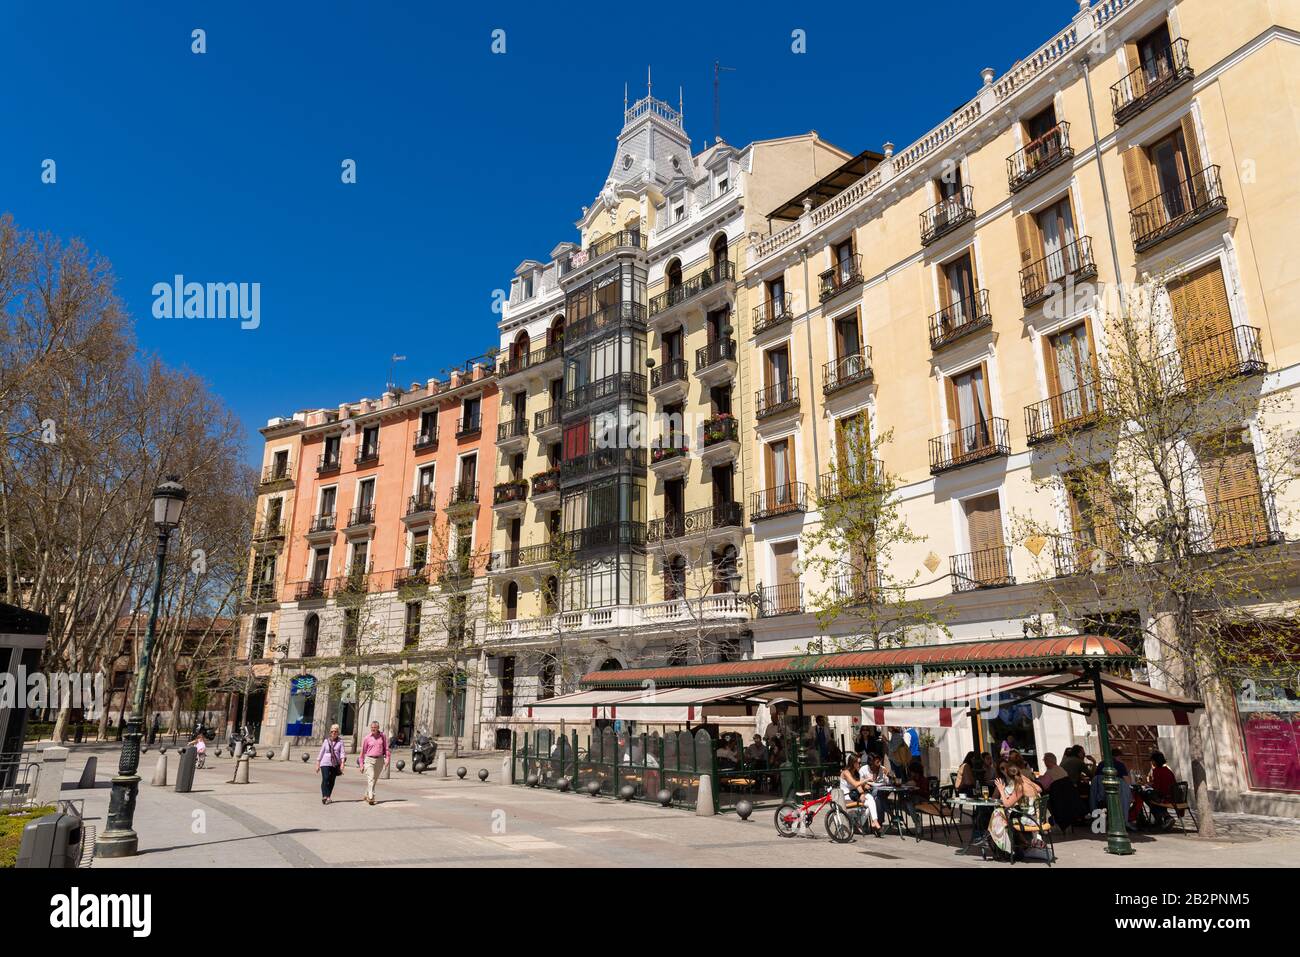 The Plaza Oriente, Madrid, Spain Stock Photo